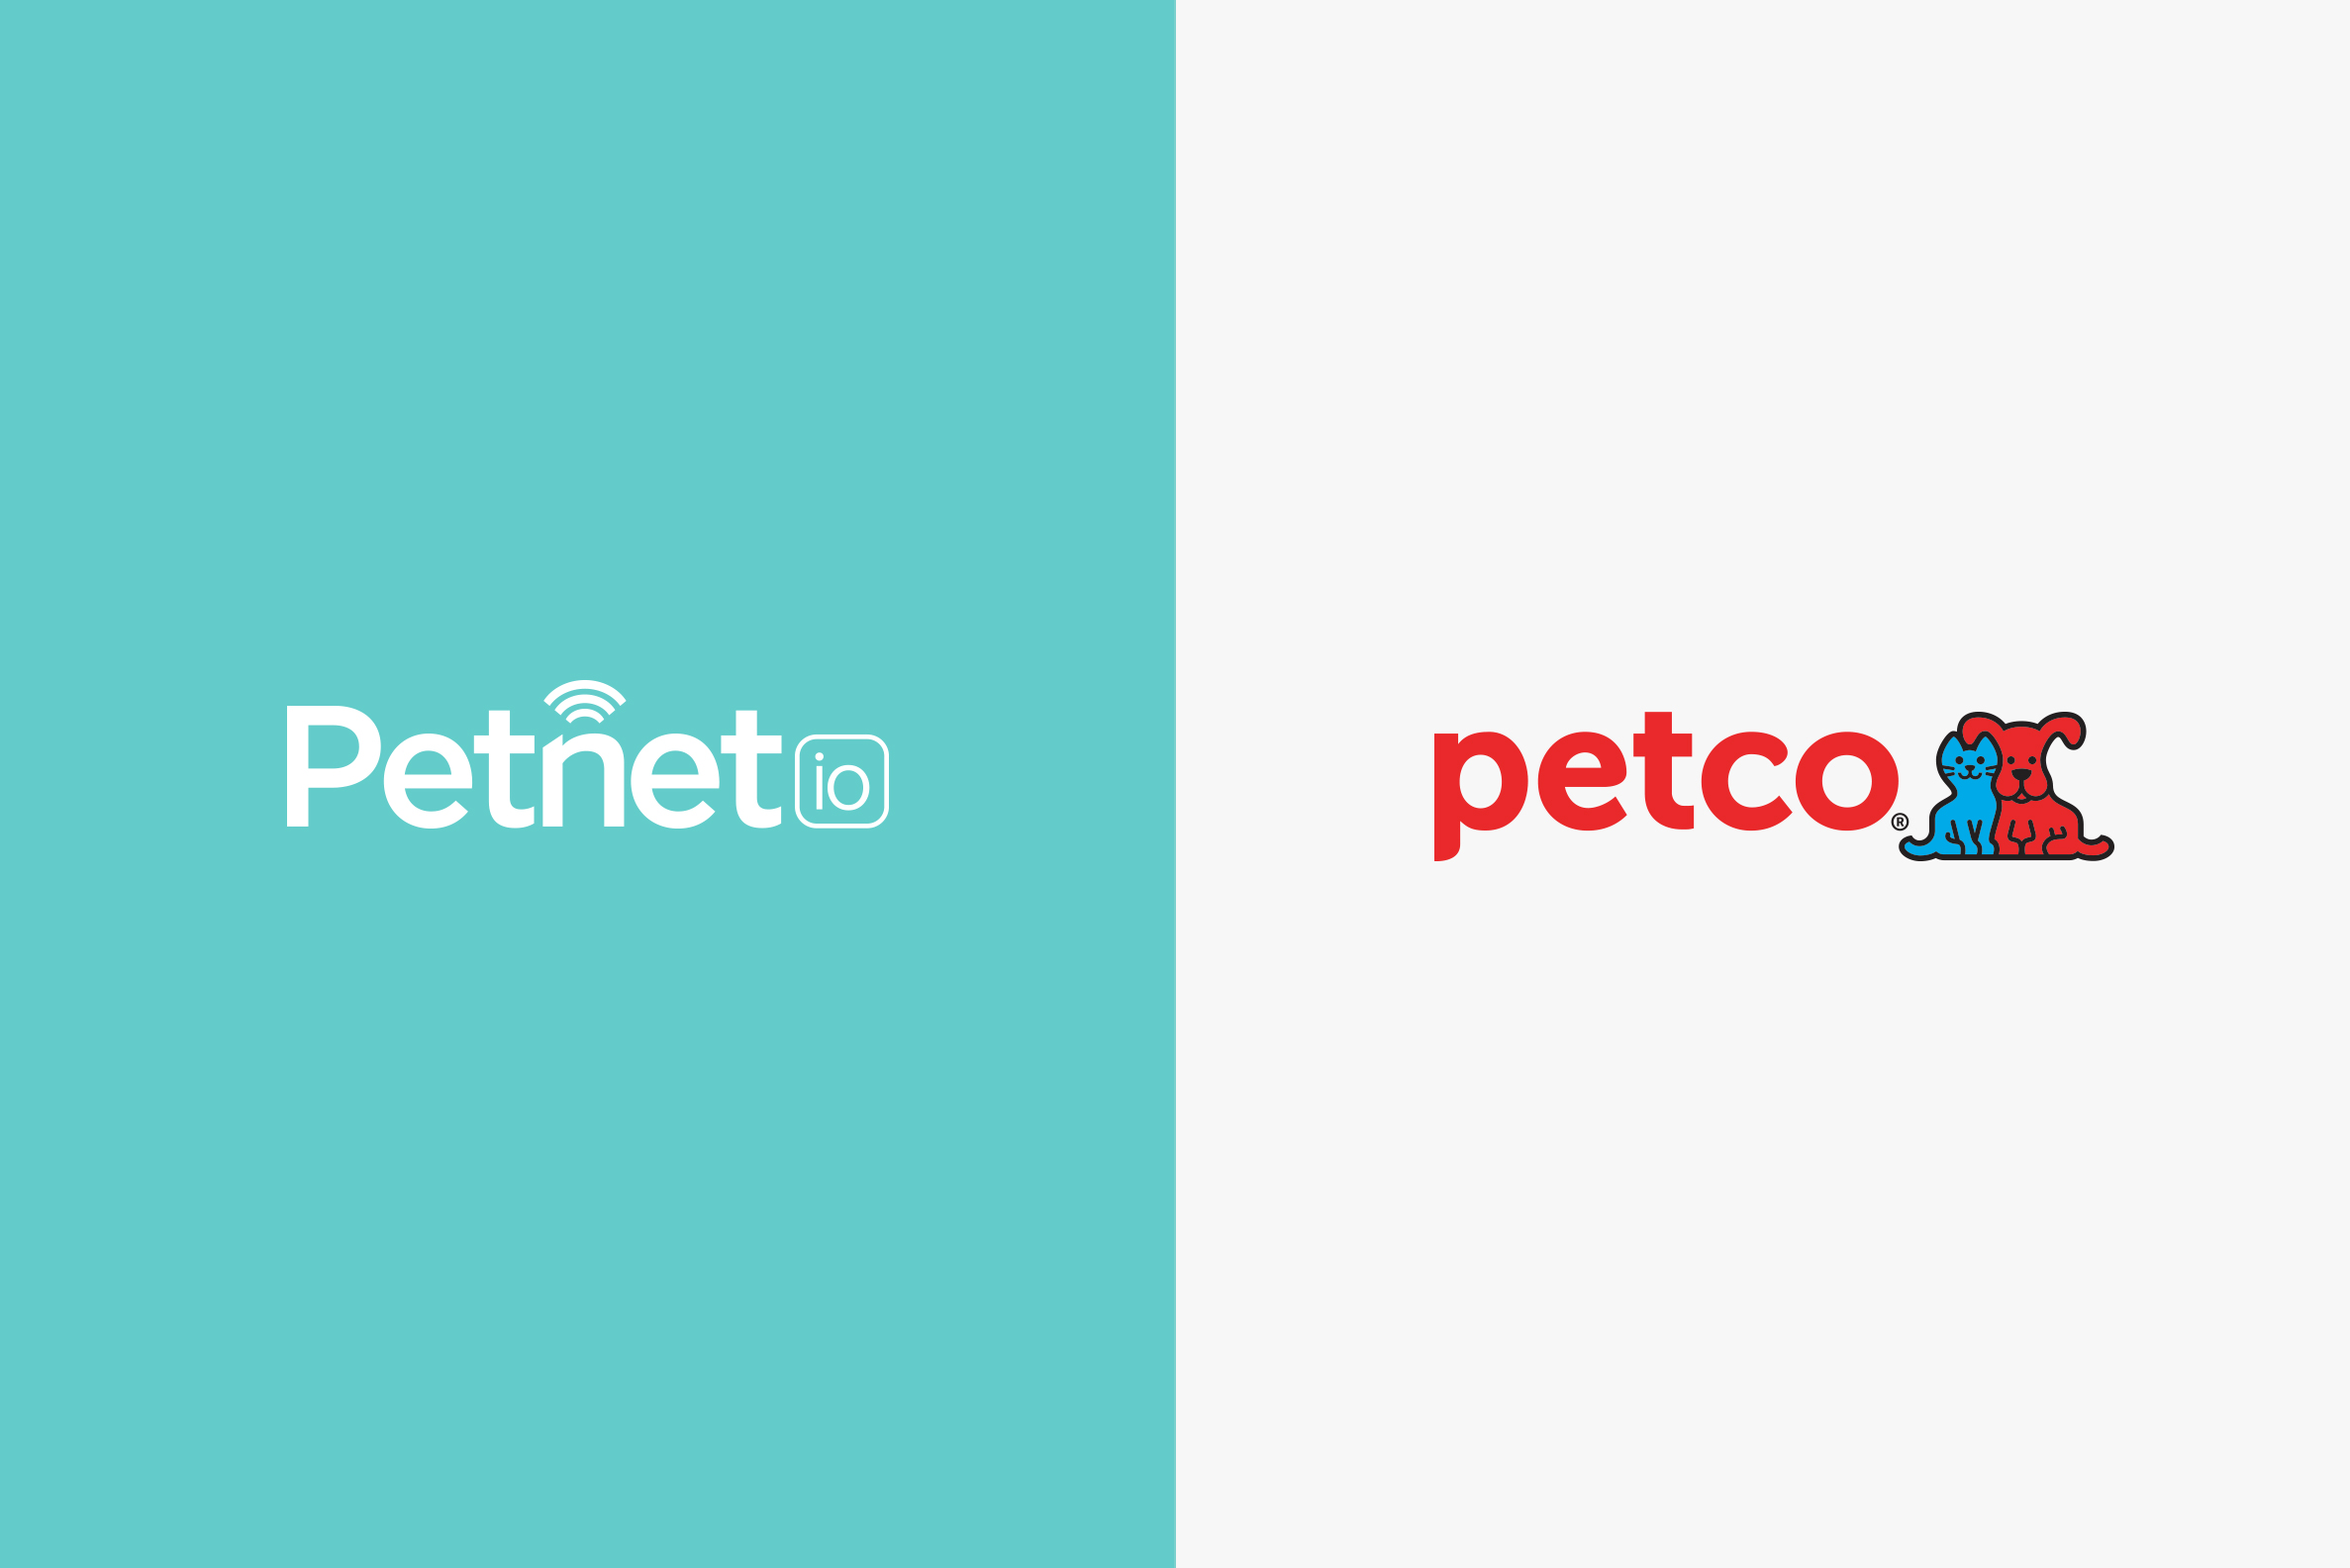 BIGfish Client Petnet Raises $10 Million in Series A Funding Led By Petco